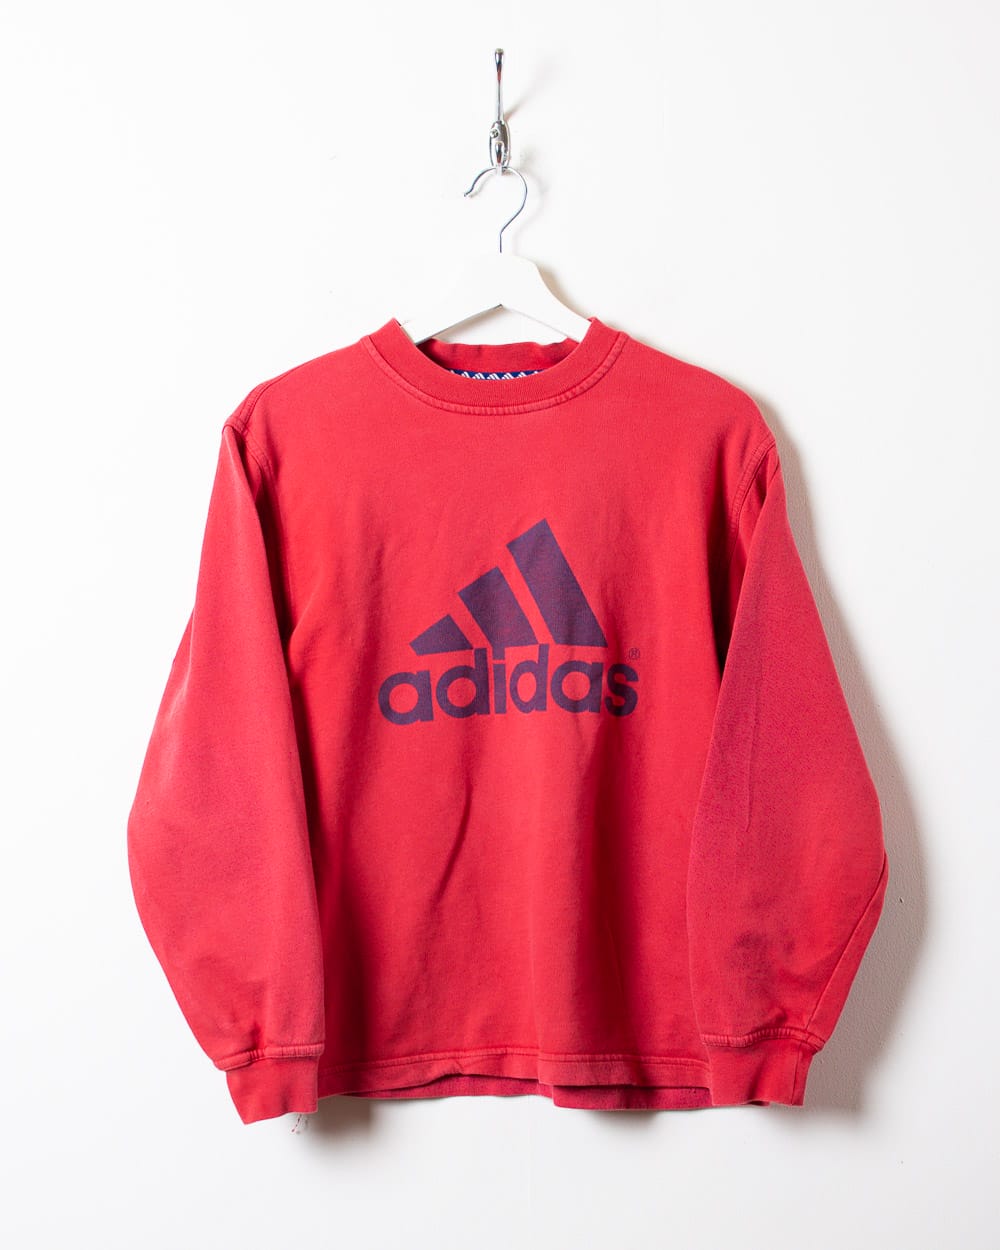 Red Adidas Sweatshirt - X-Small